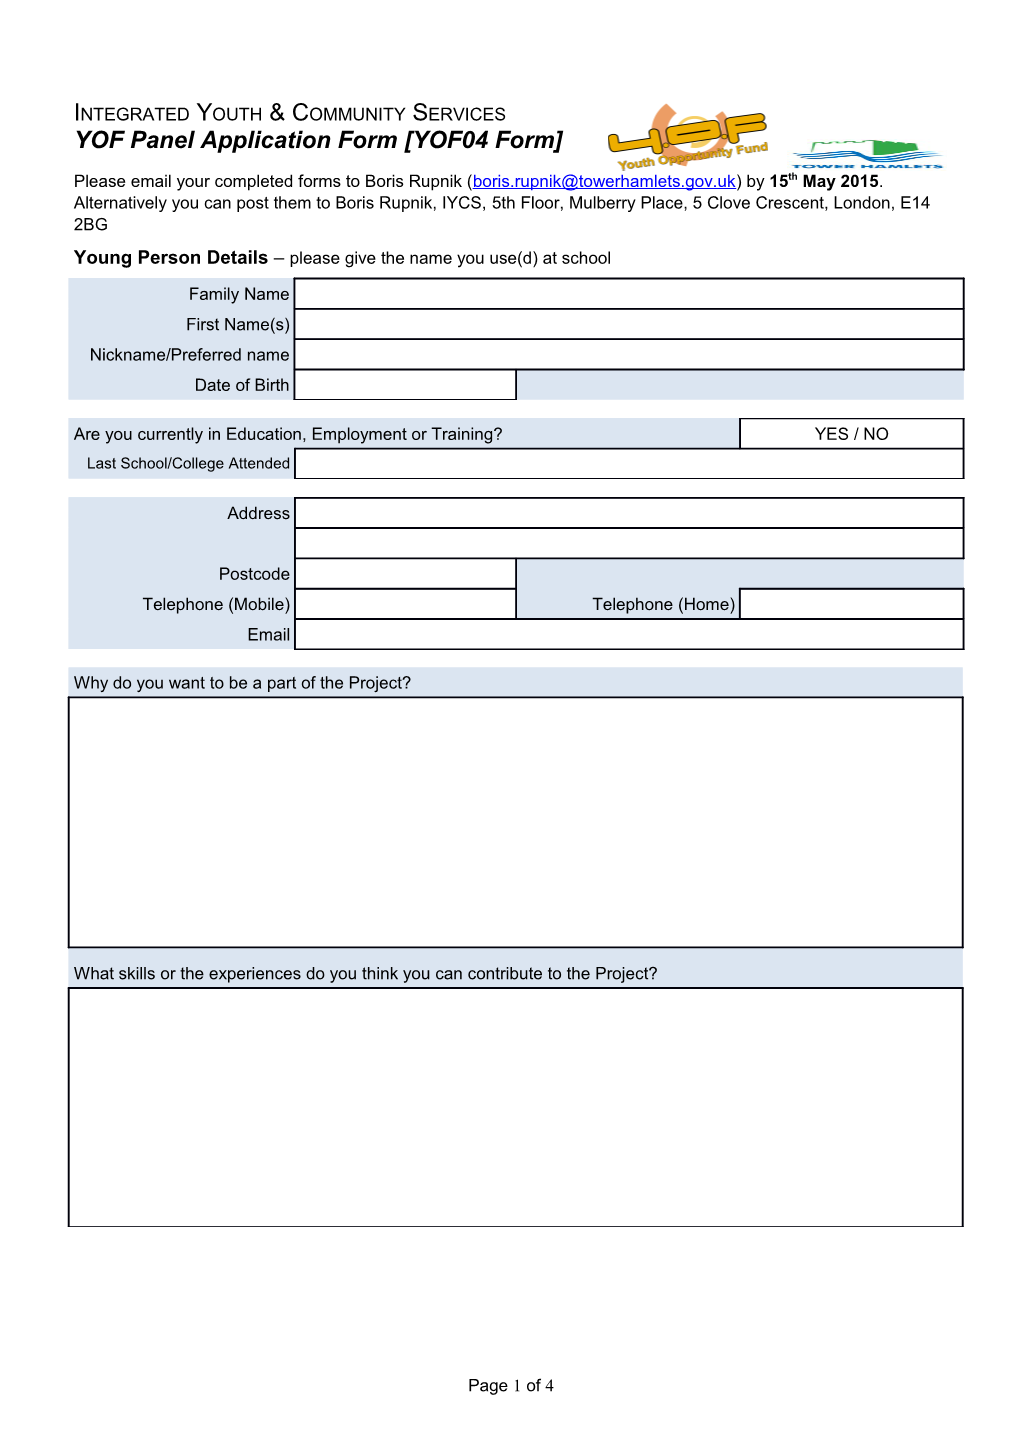 YOF Panel Application Form YOF04 Form